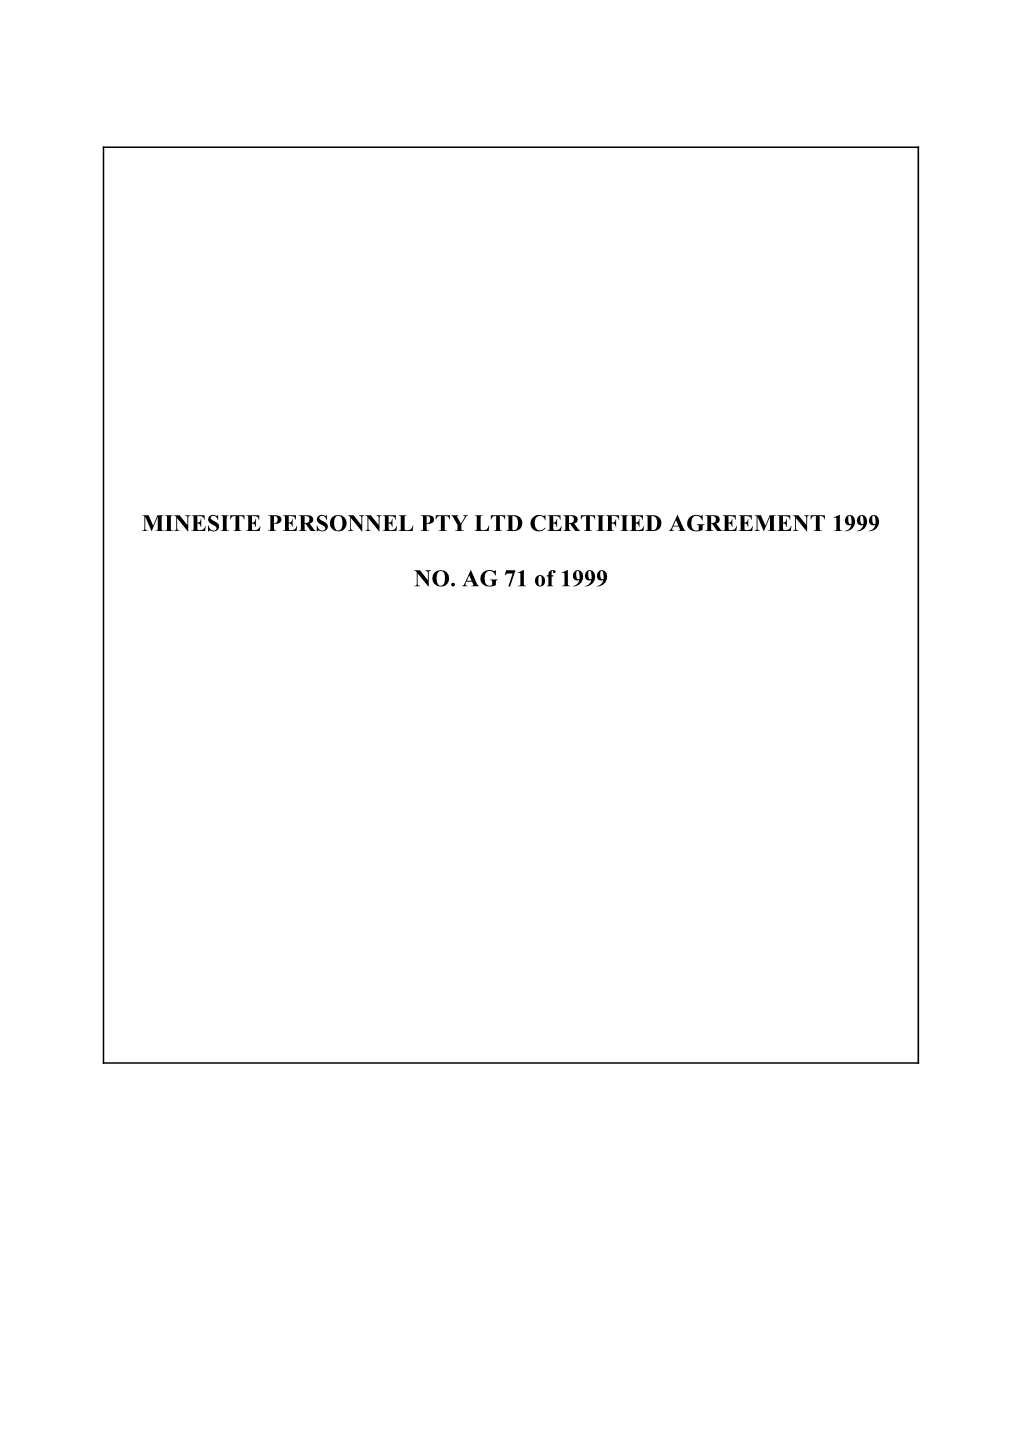 Minesite Personnel Pty Ltd Certified Agreement 1999